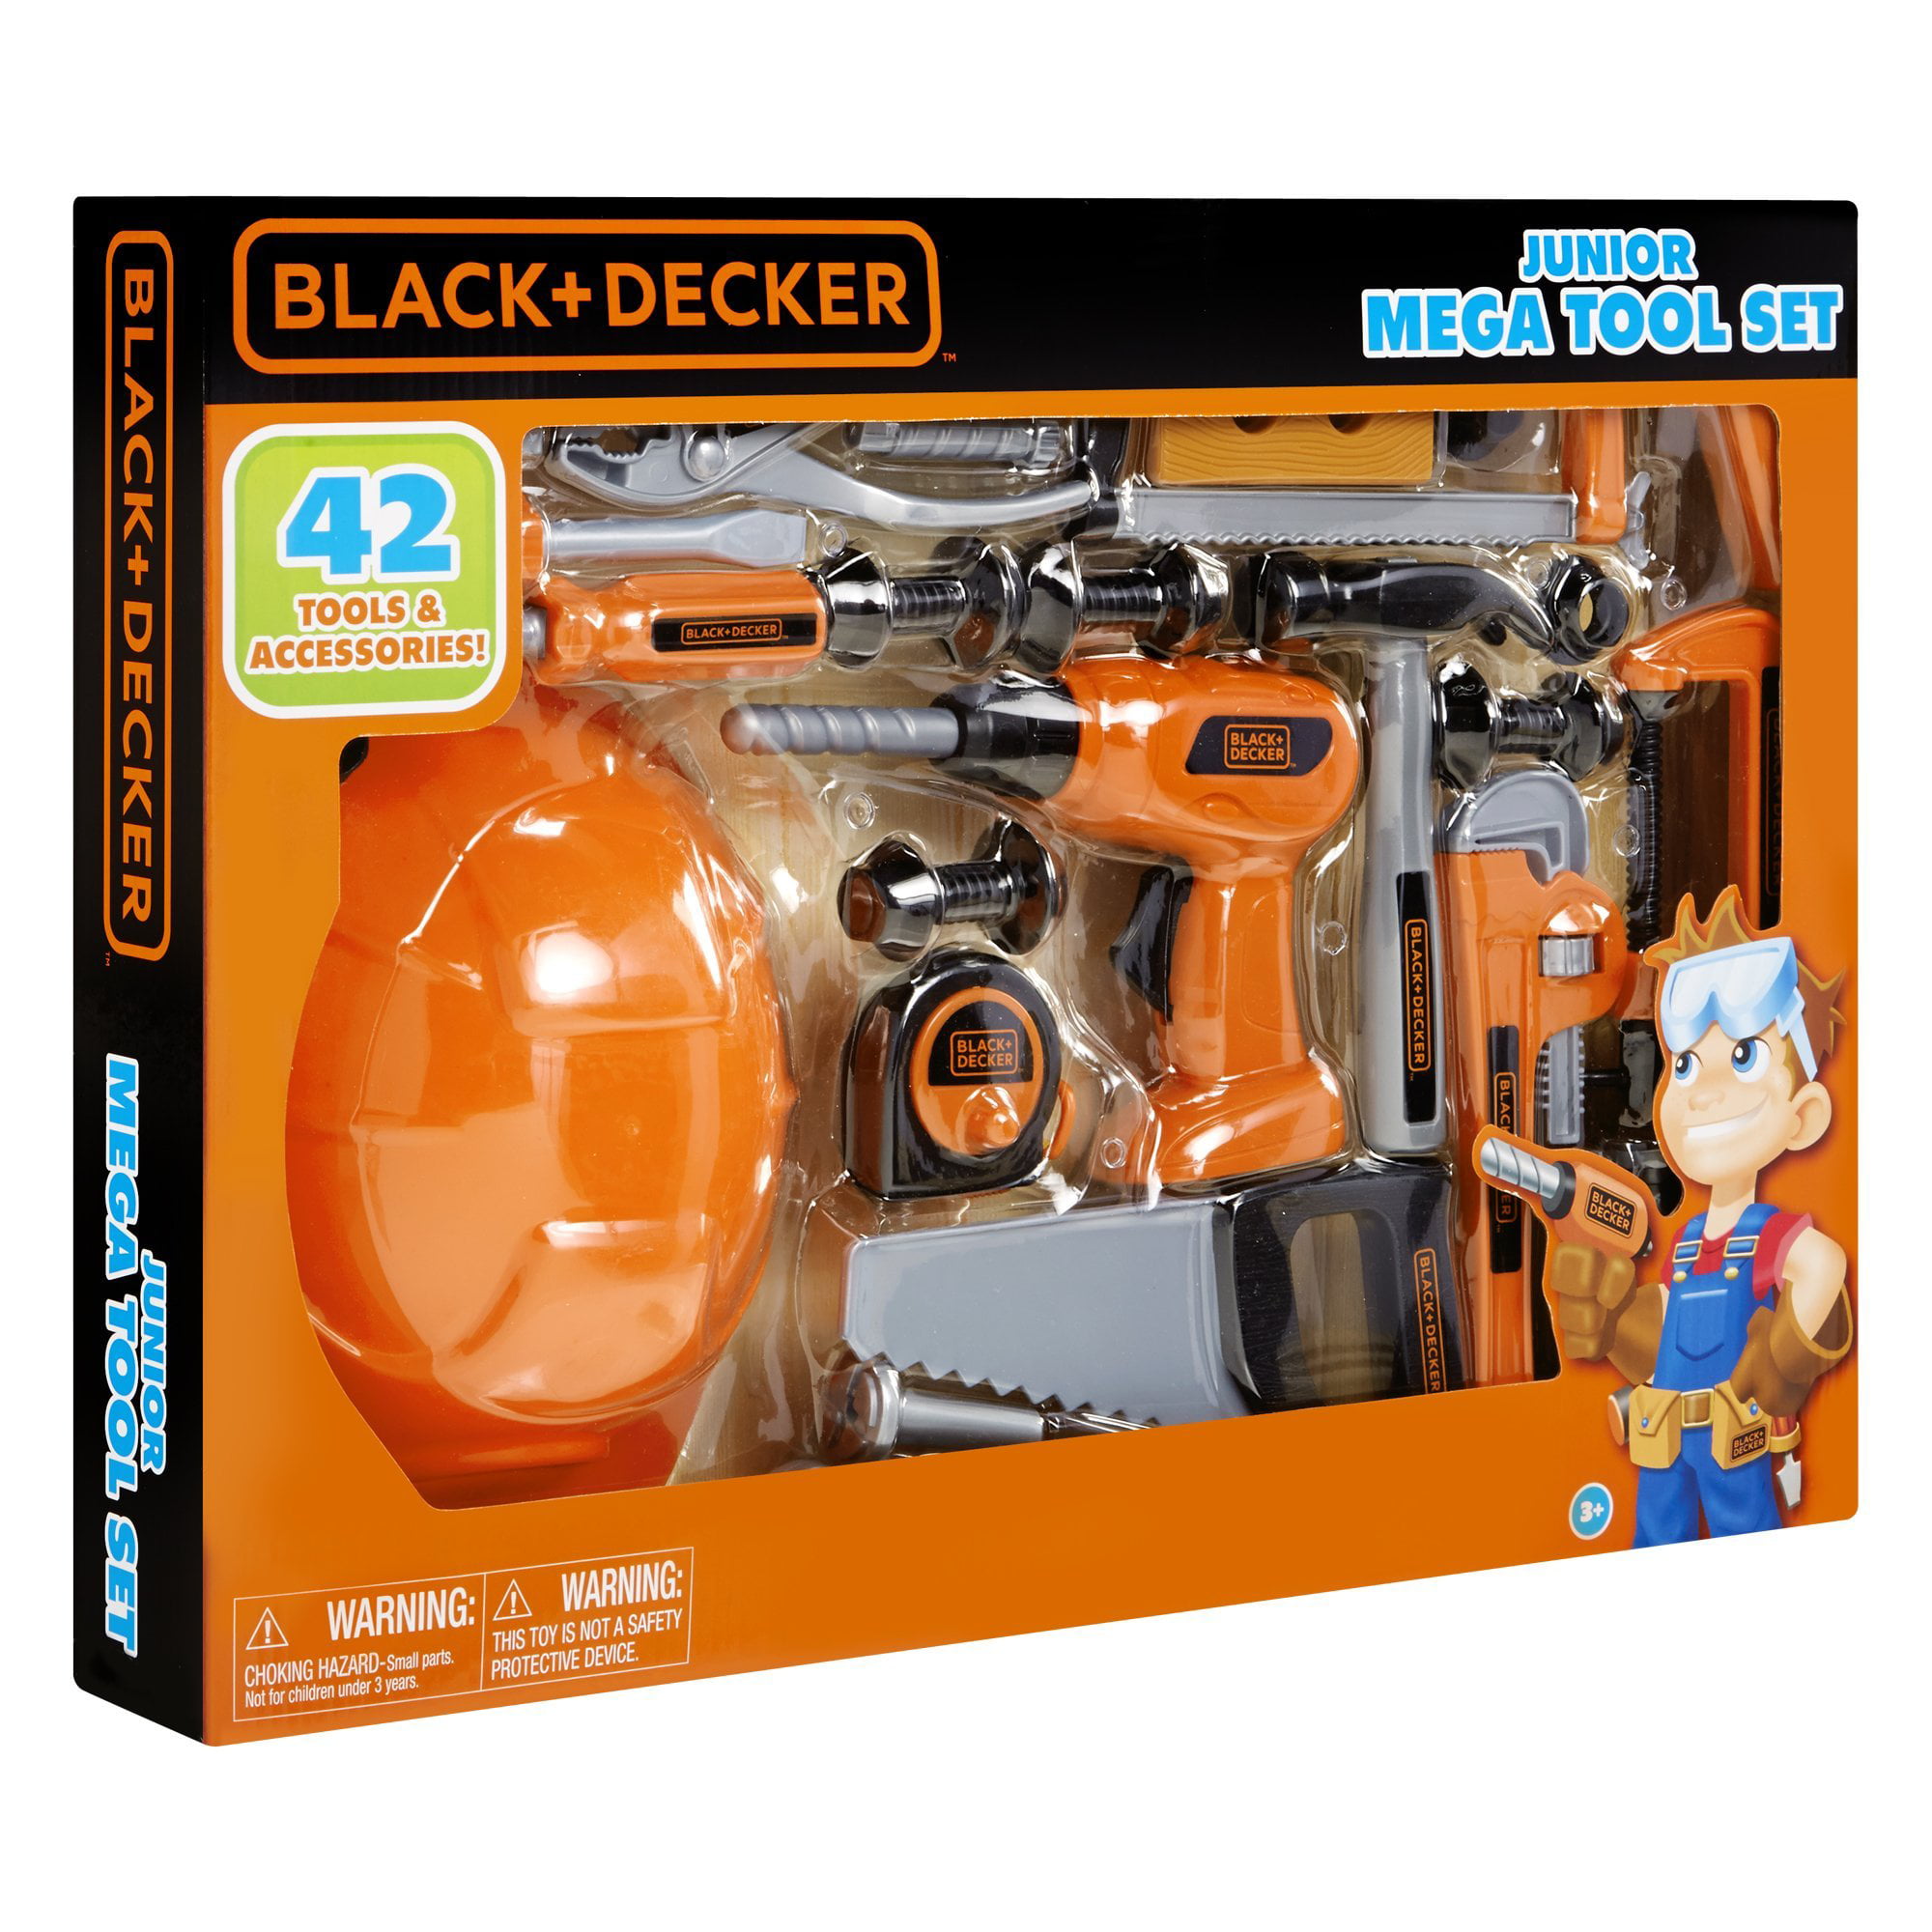 Jakks- Black & Decker Lil Builder Tool Set - 15 Tools & Accessories Pl –